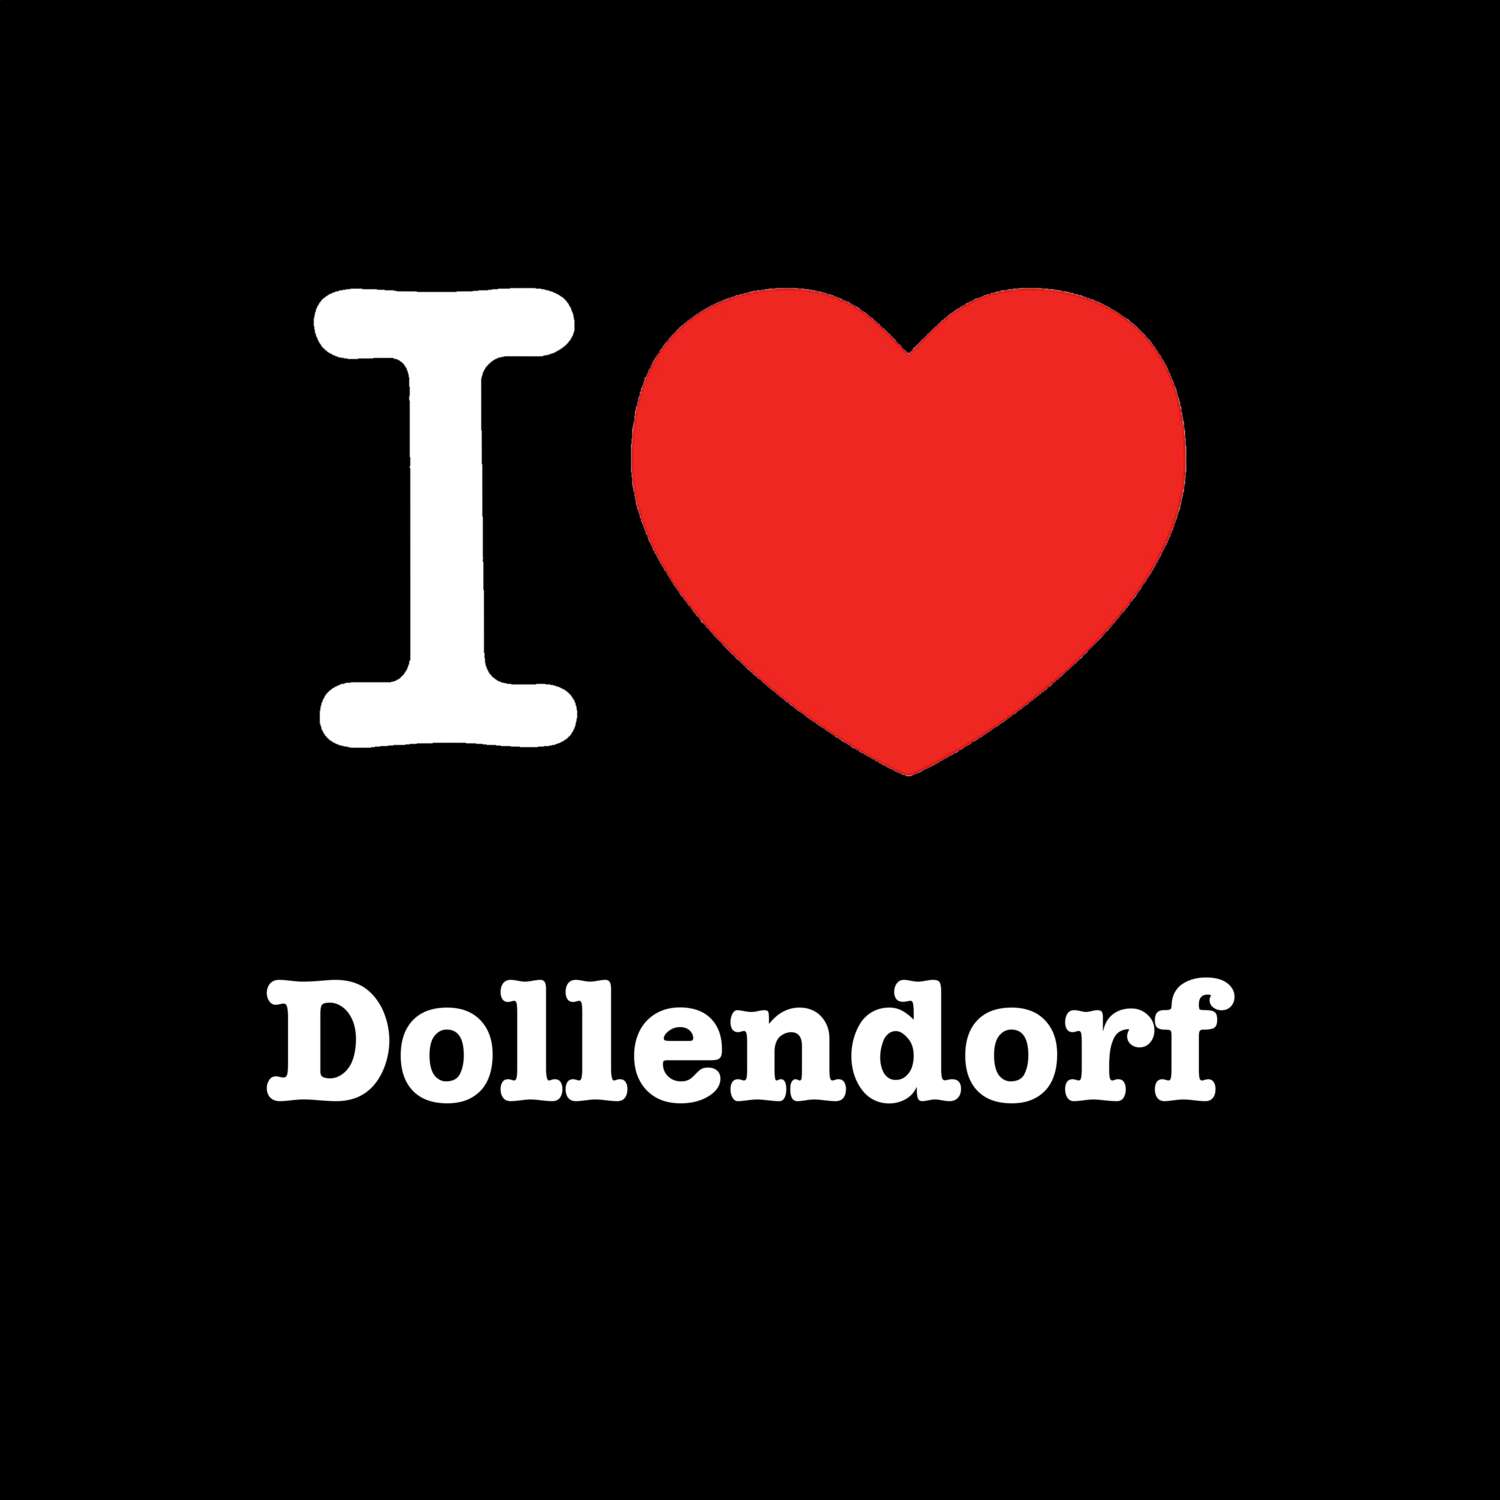 Dollendorf T-Shirt »I love«